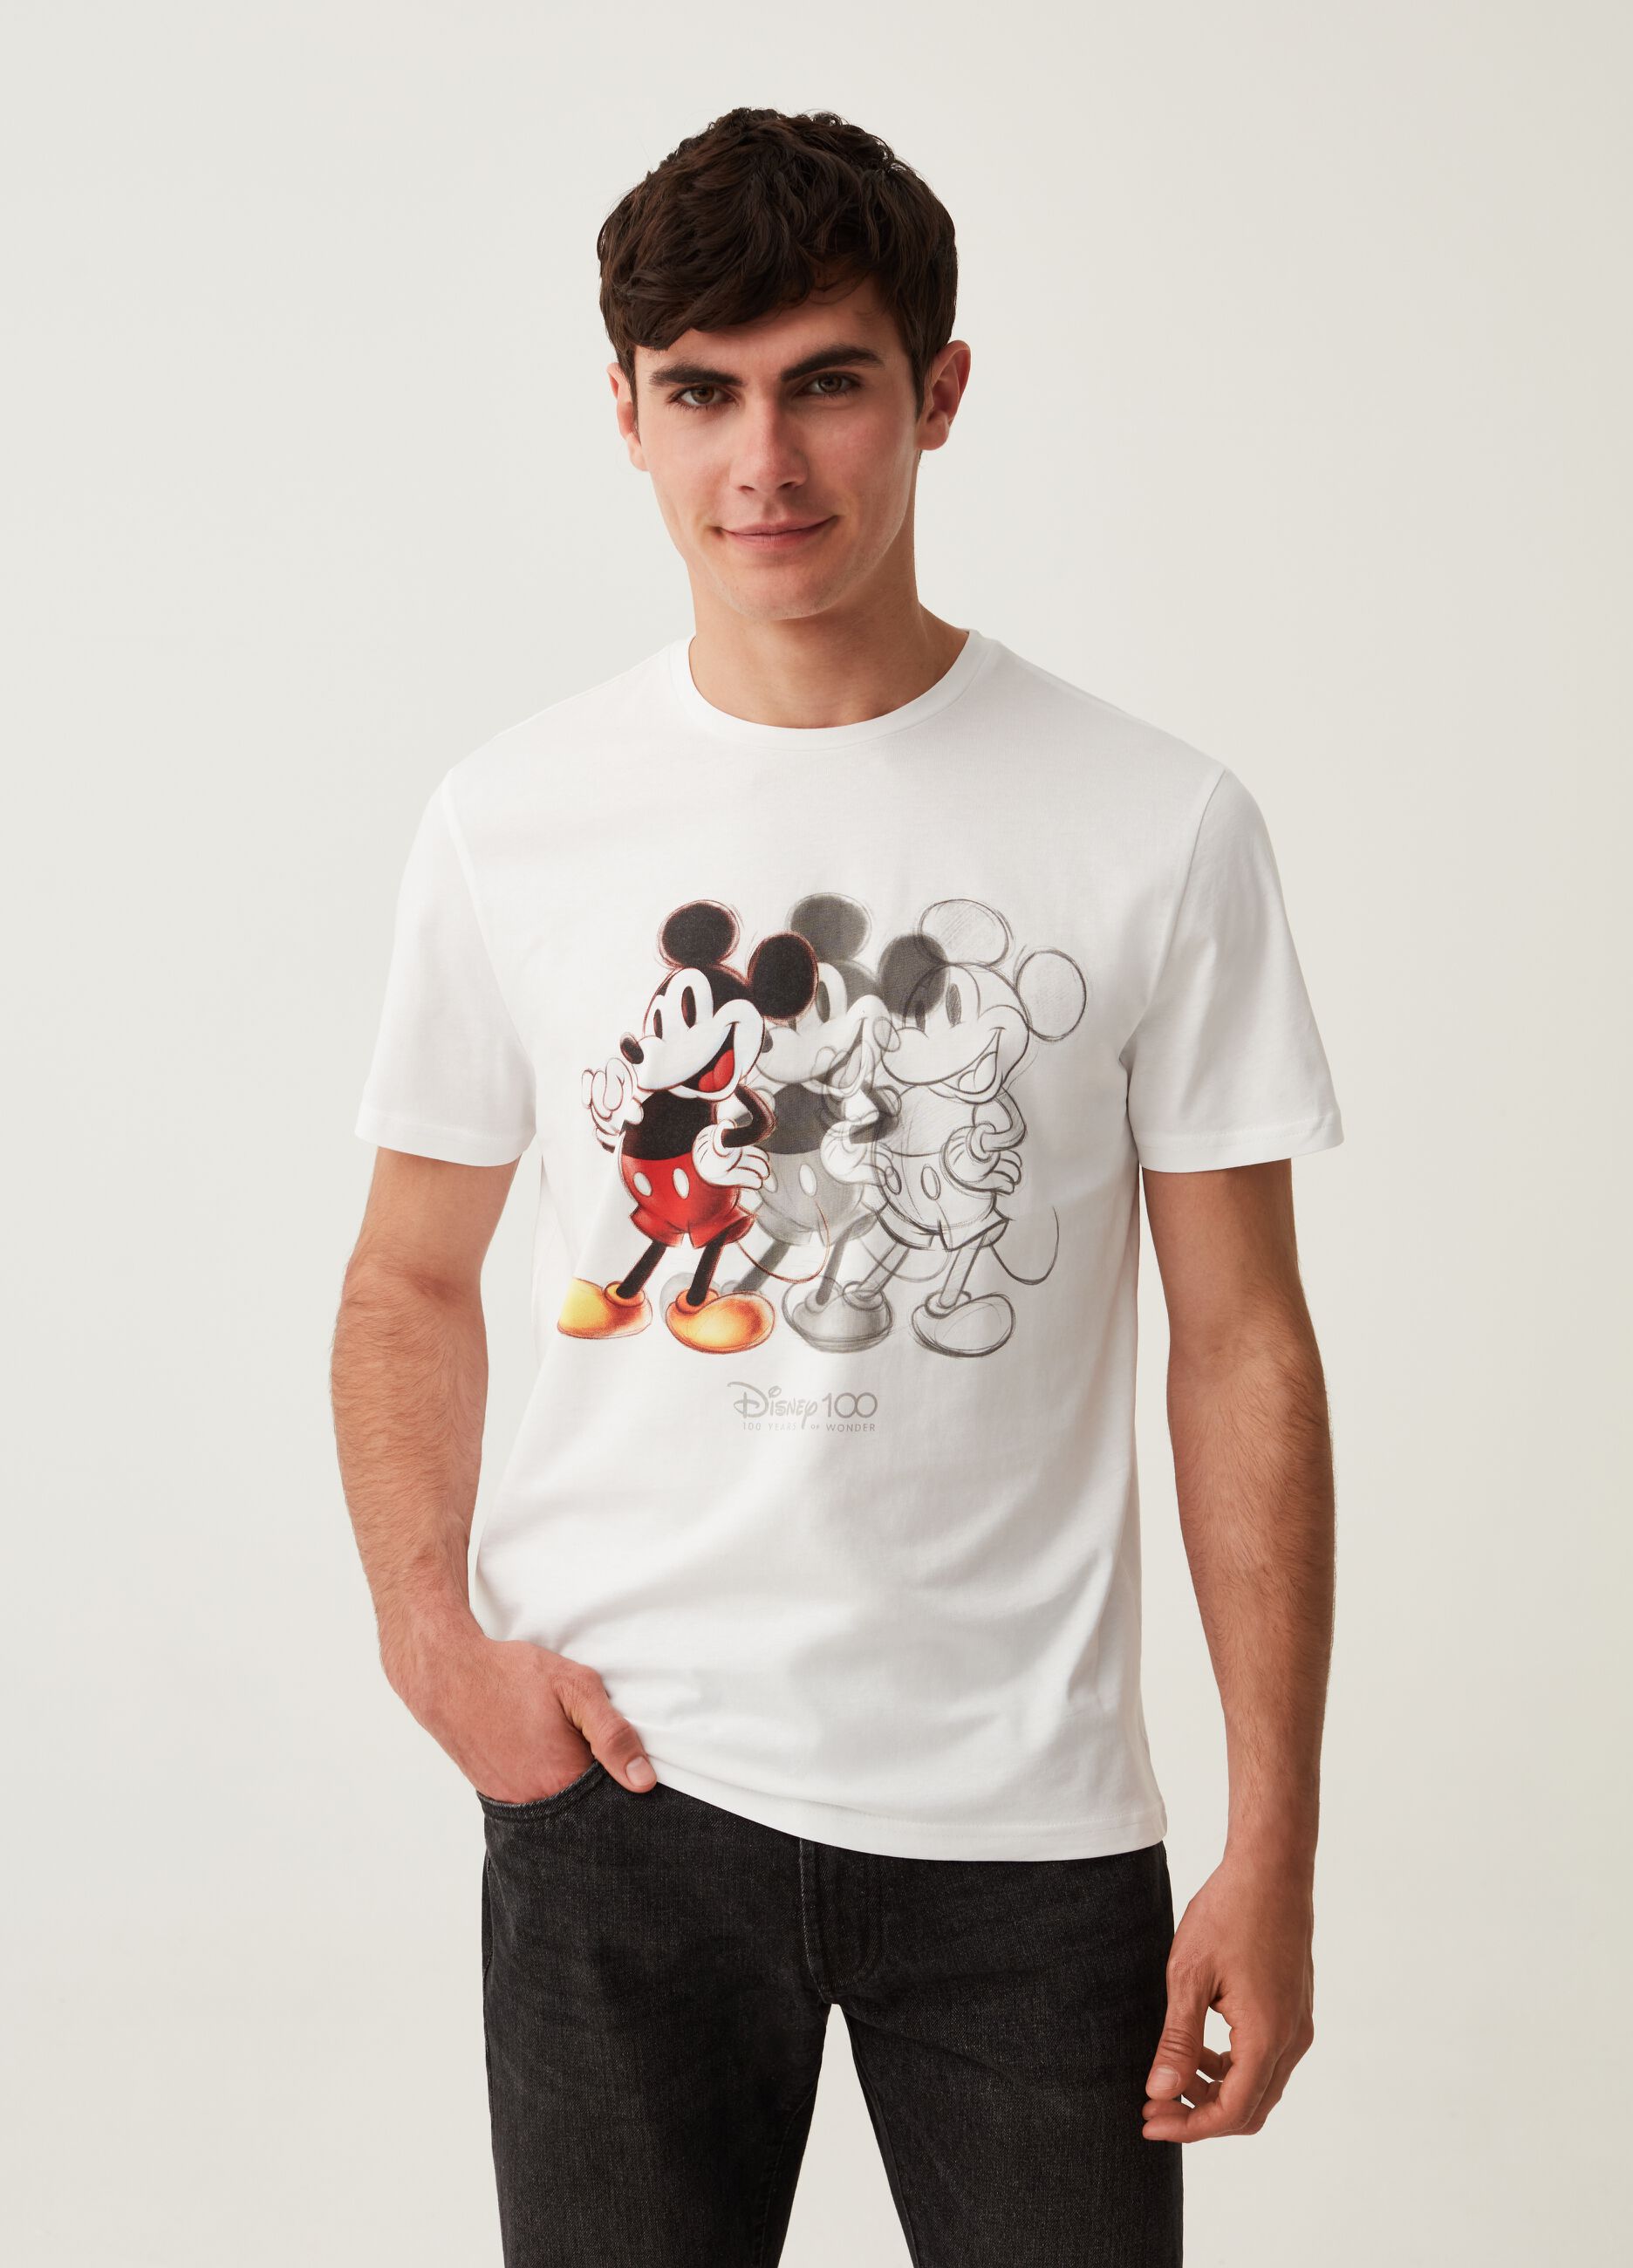 Cotton T-shirt with Disney 100th Anniversary print